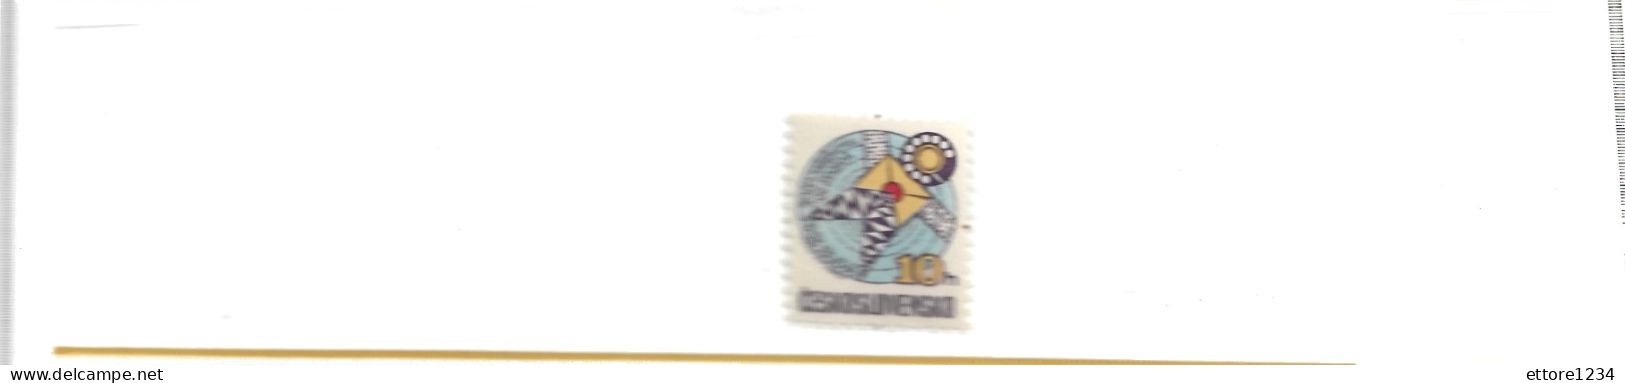 Cecoslovacchia 1979 - Unused Stamps